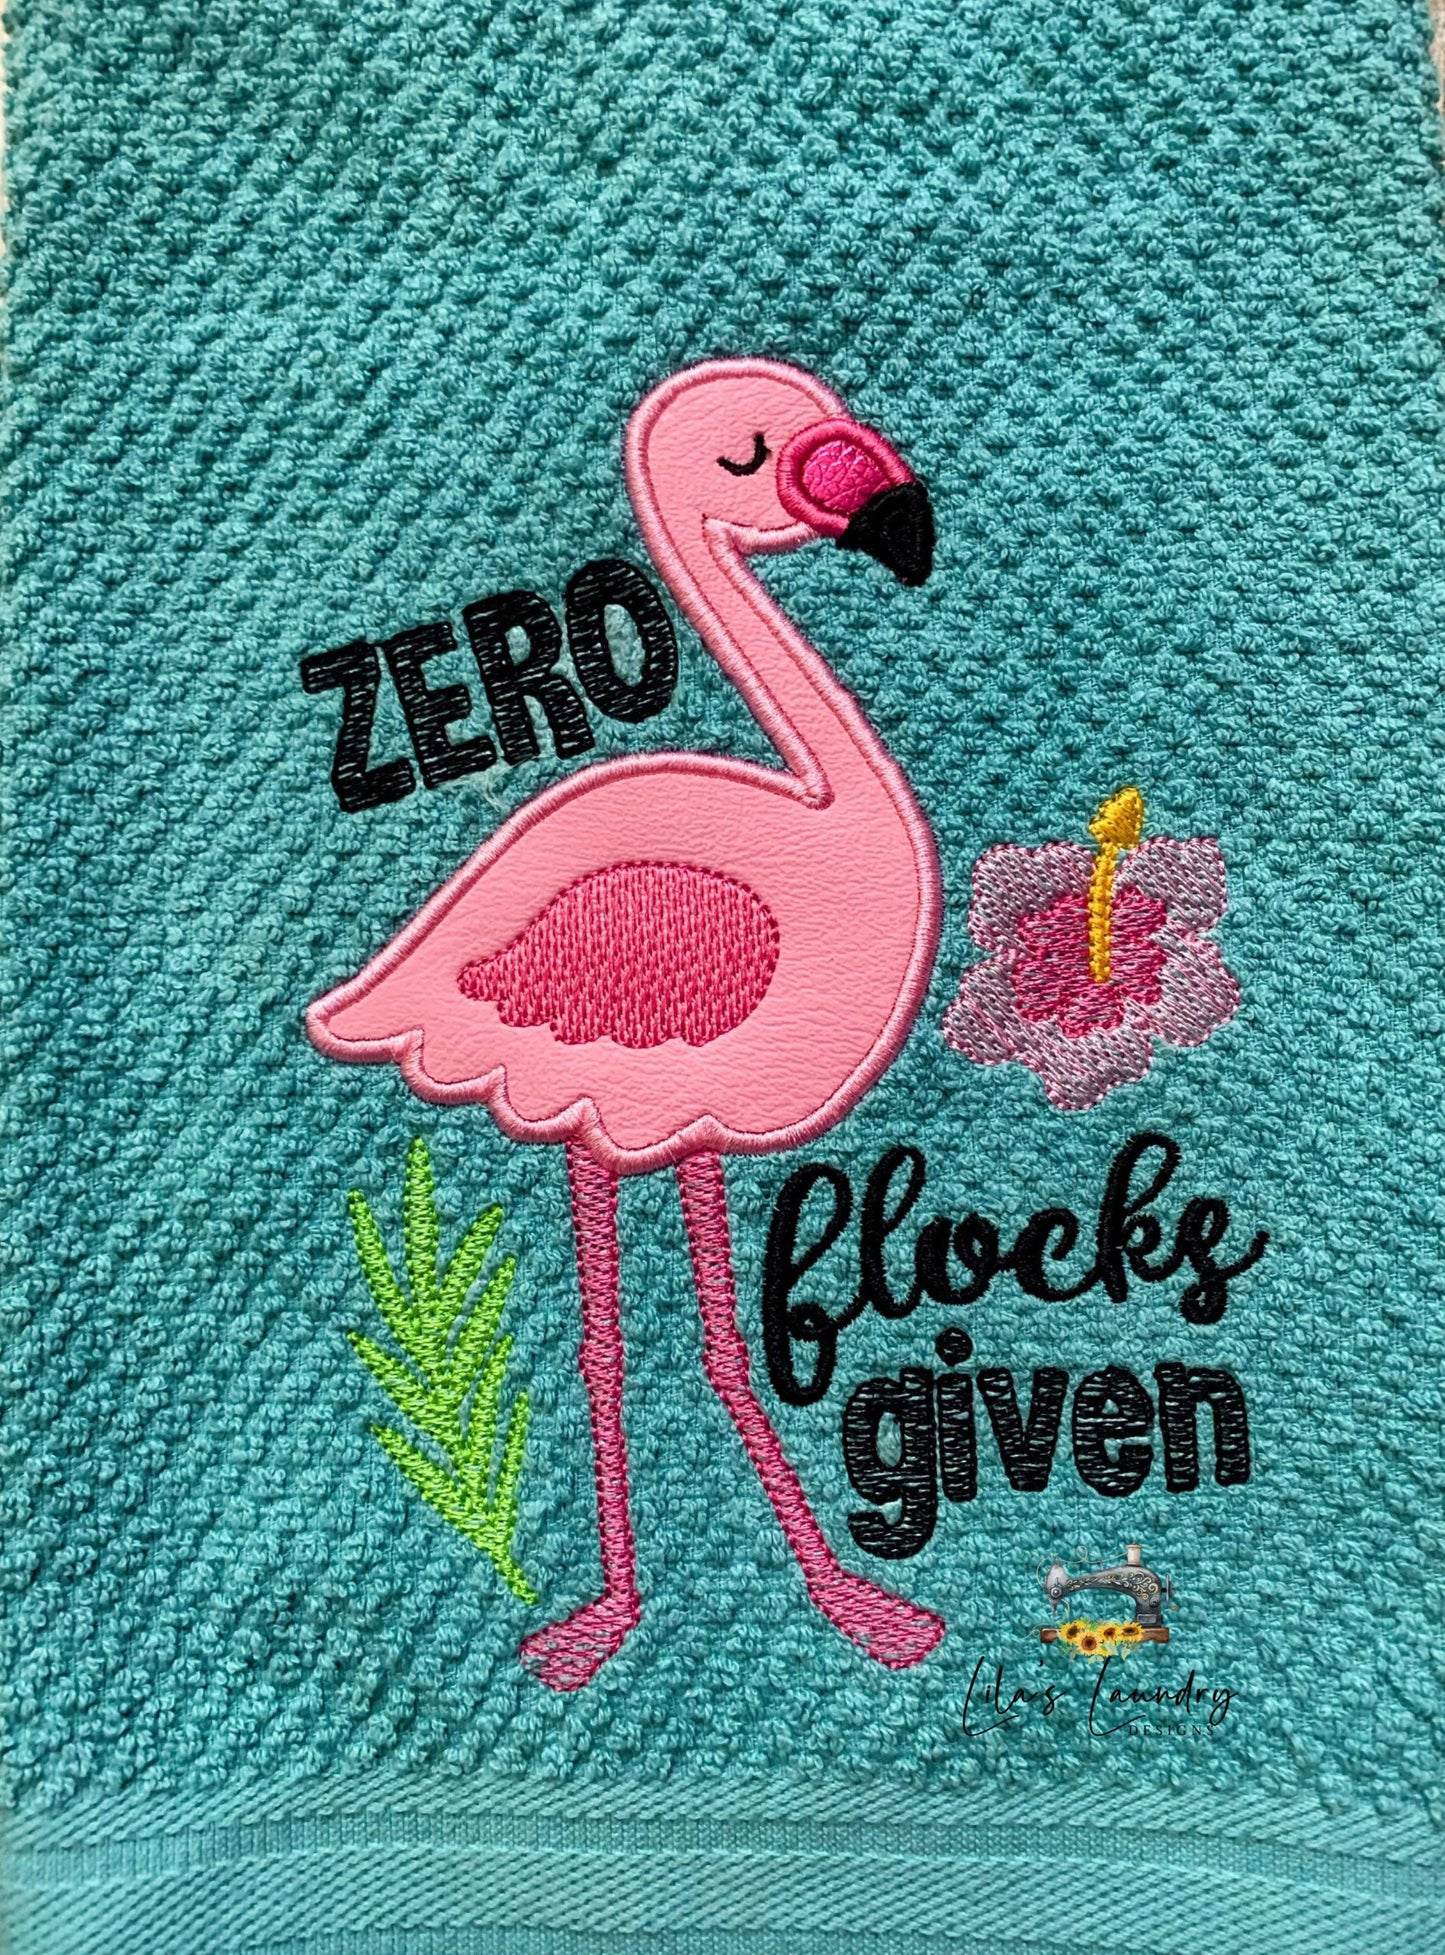 Zero Flocks Given Applique - 3 sizes- Digital Embroidery Design